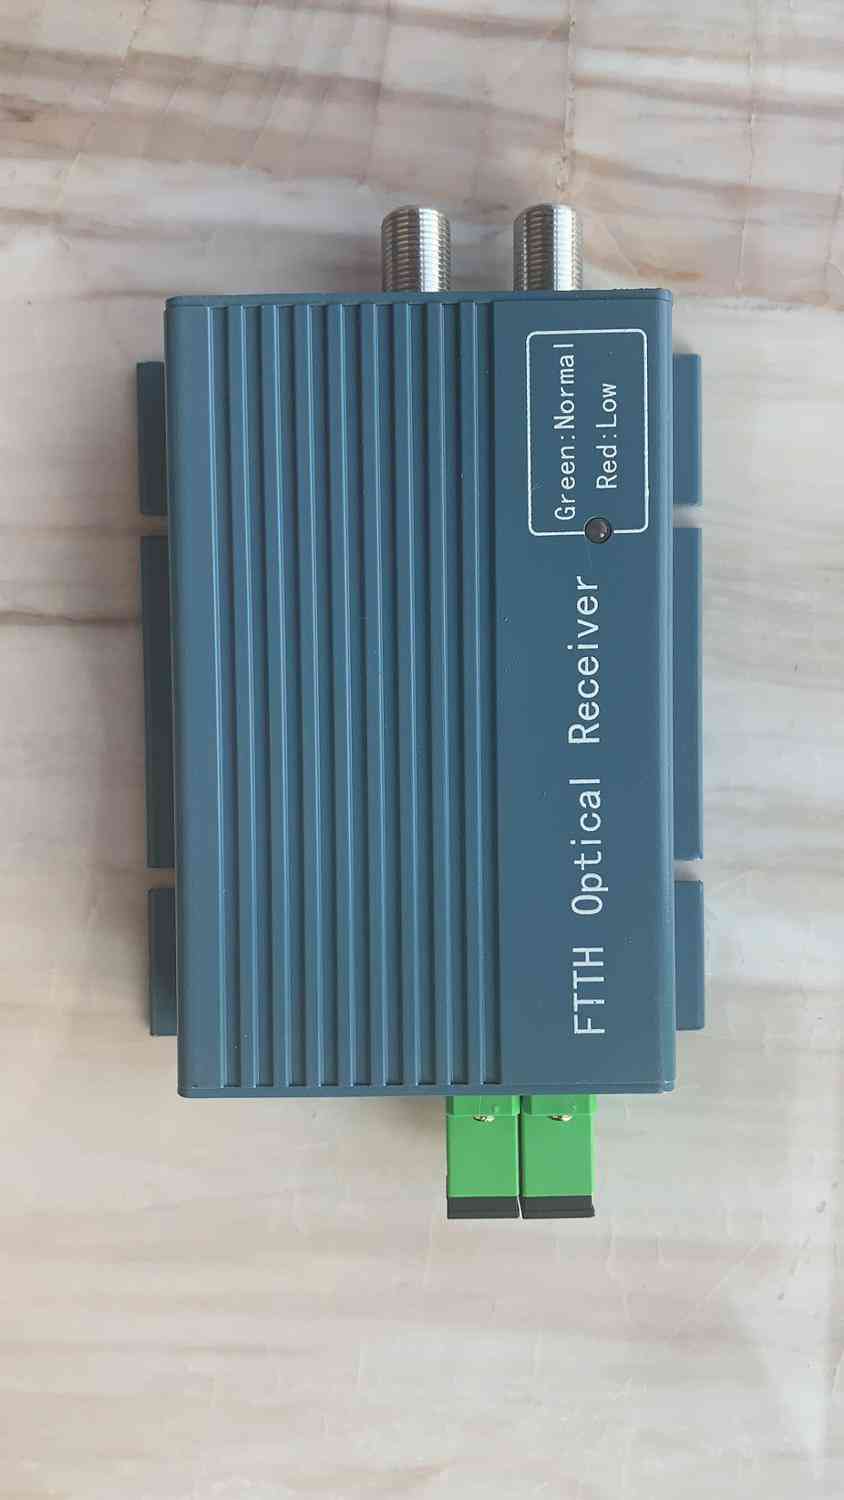 Alumimium- Fiber Optical Receiver, Duplex Connector With Output Port Wdm